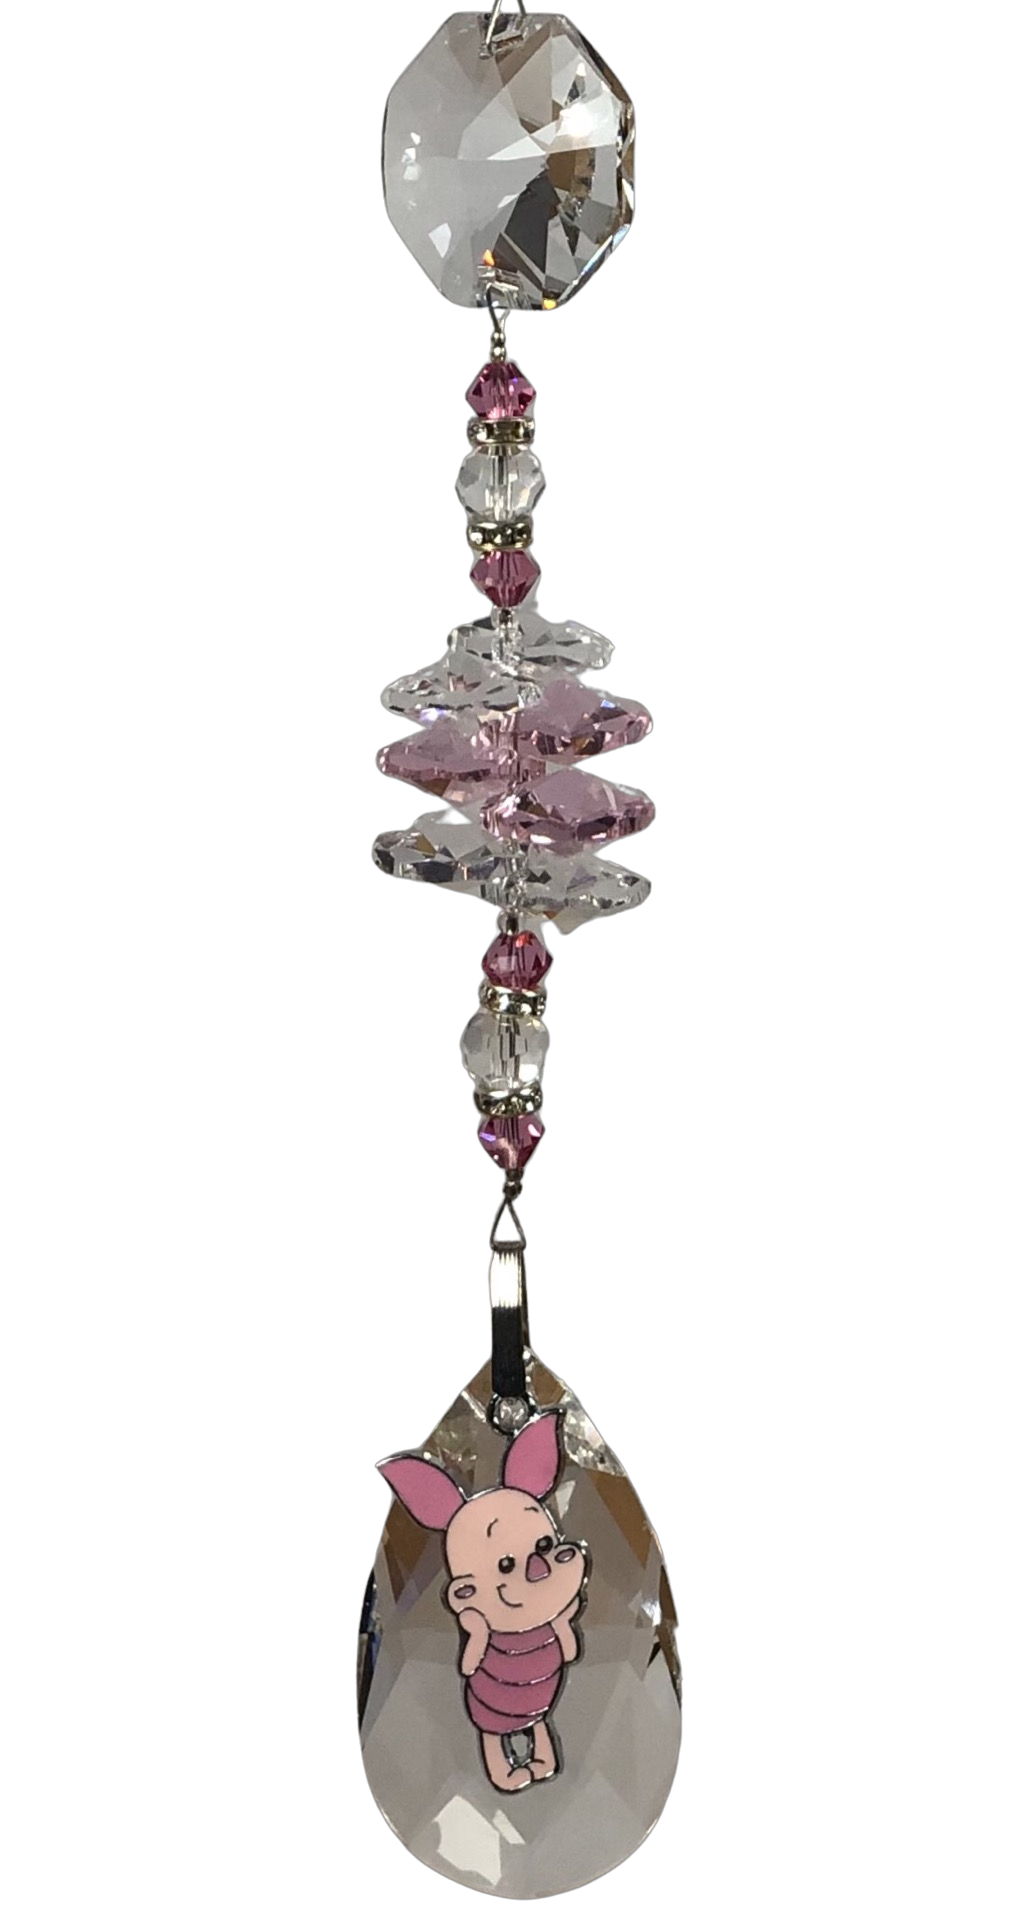 Piglet crystal suncatcher with rose quartz gemstones